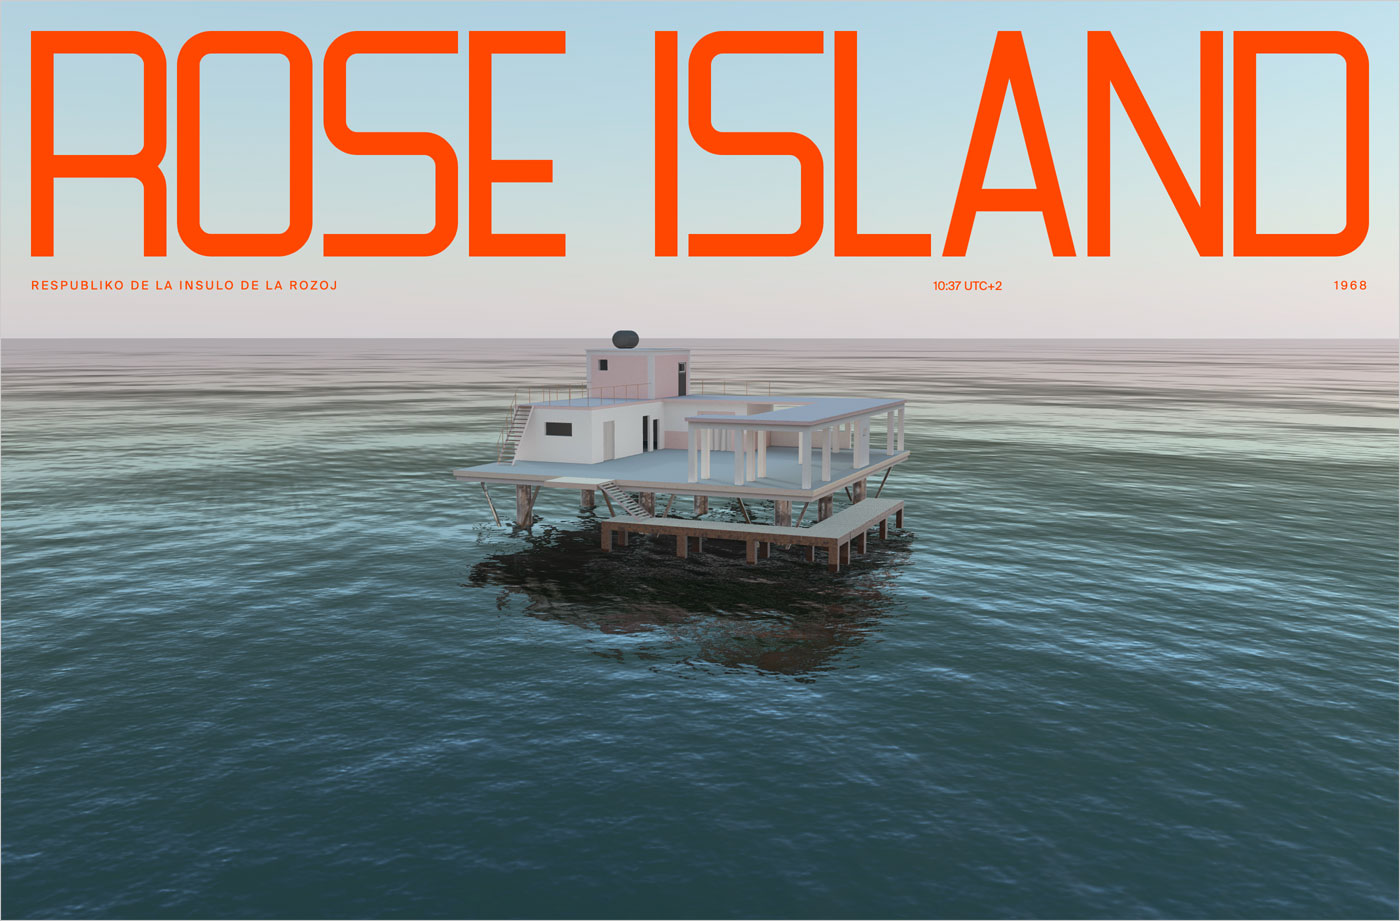 Rose Island – The story of a micronationウェブサイトの画面キャプチャ画像